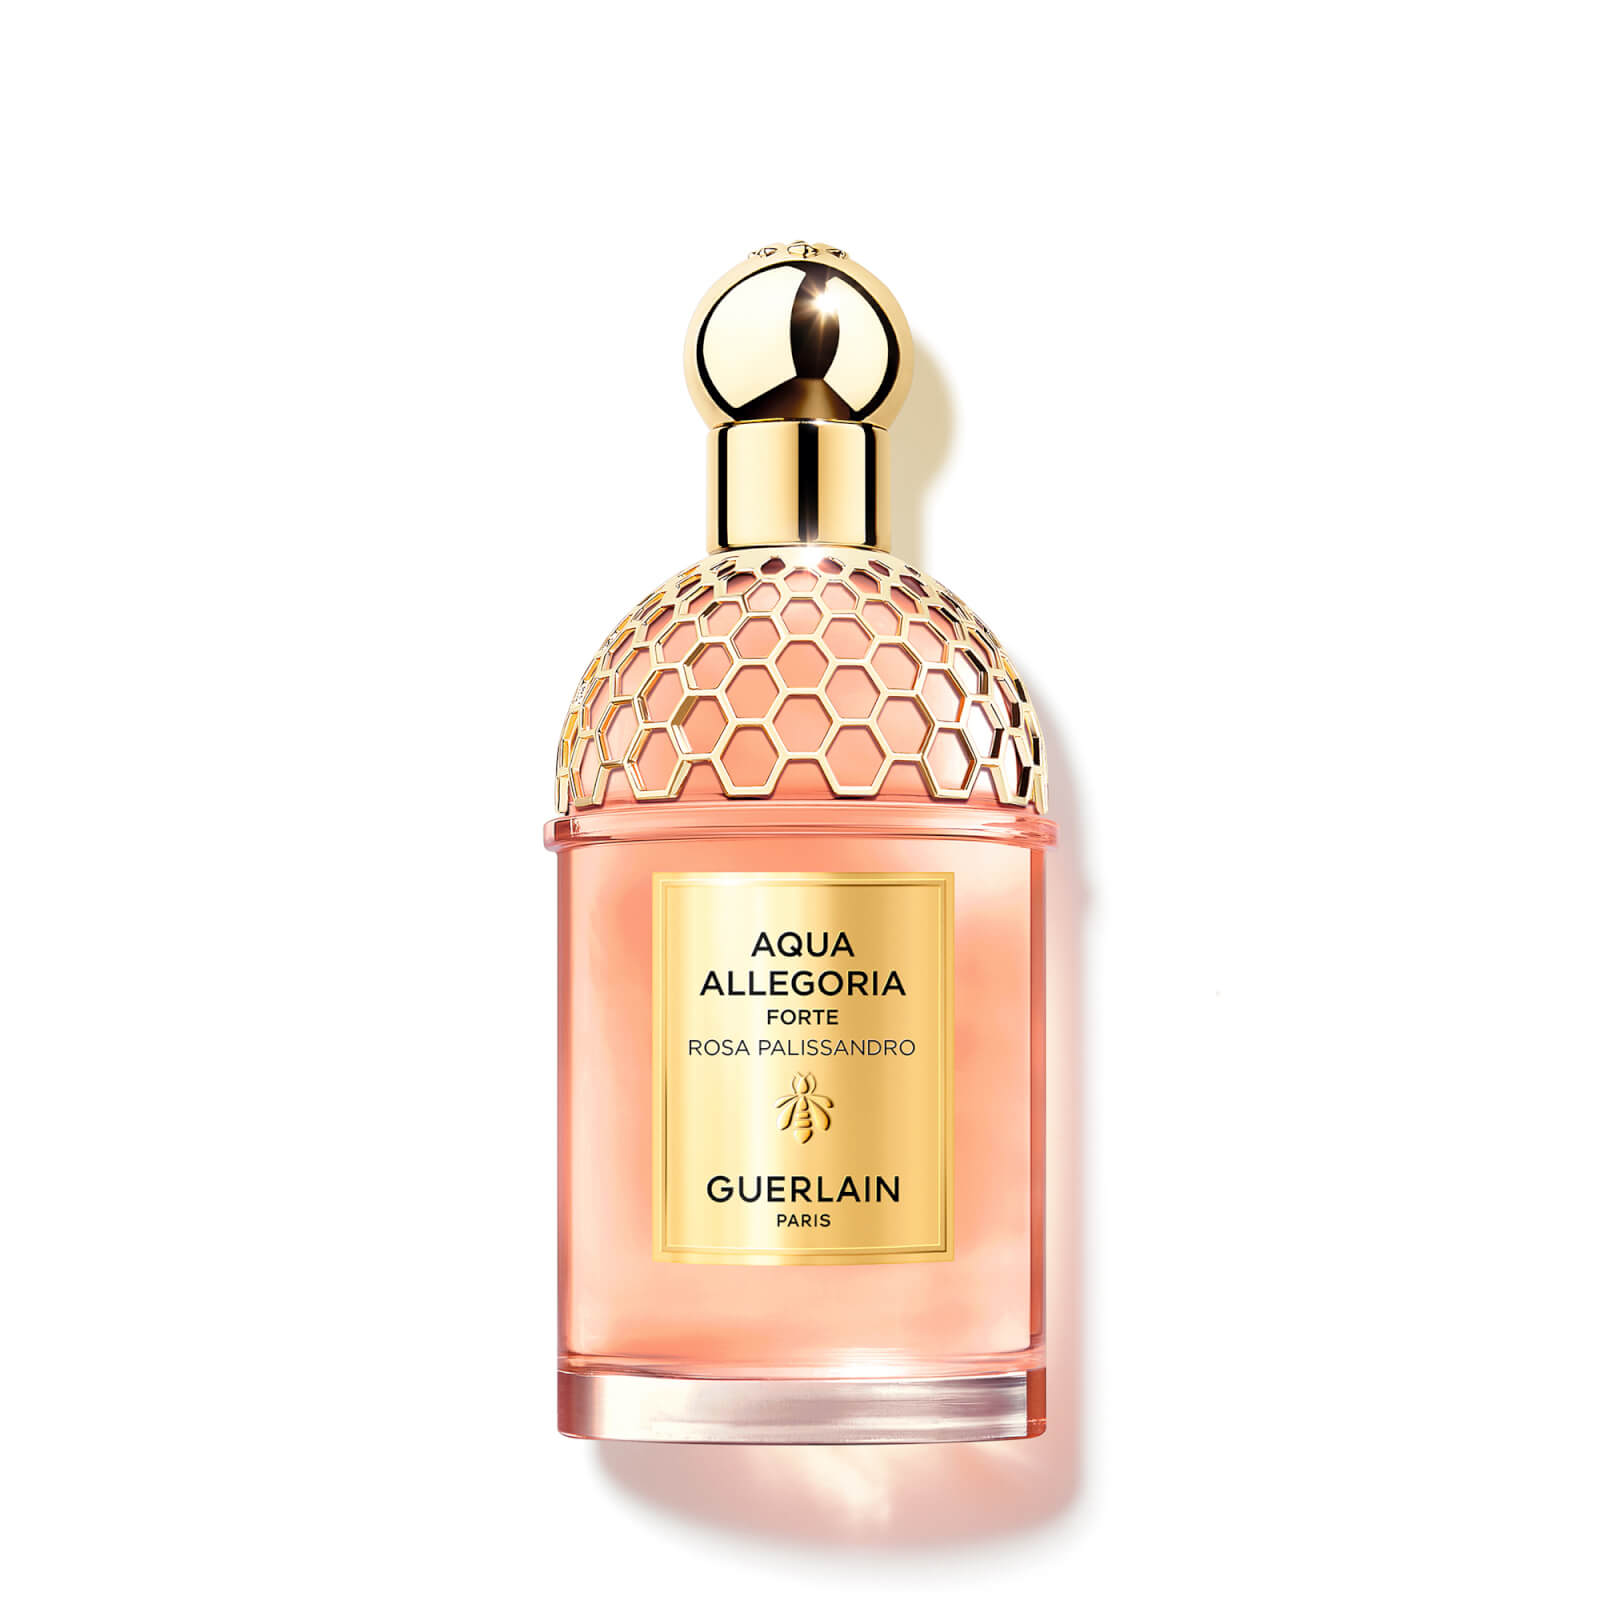 Photos - Women's Fragrance Guerlain Aqua Allegoria Forte Rosa Palissandro Eau de Parfum 125ml 